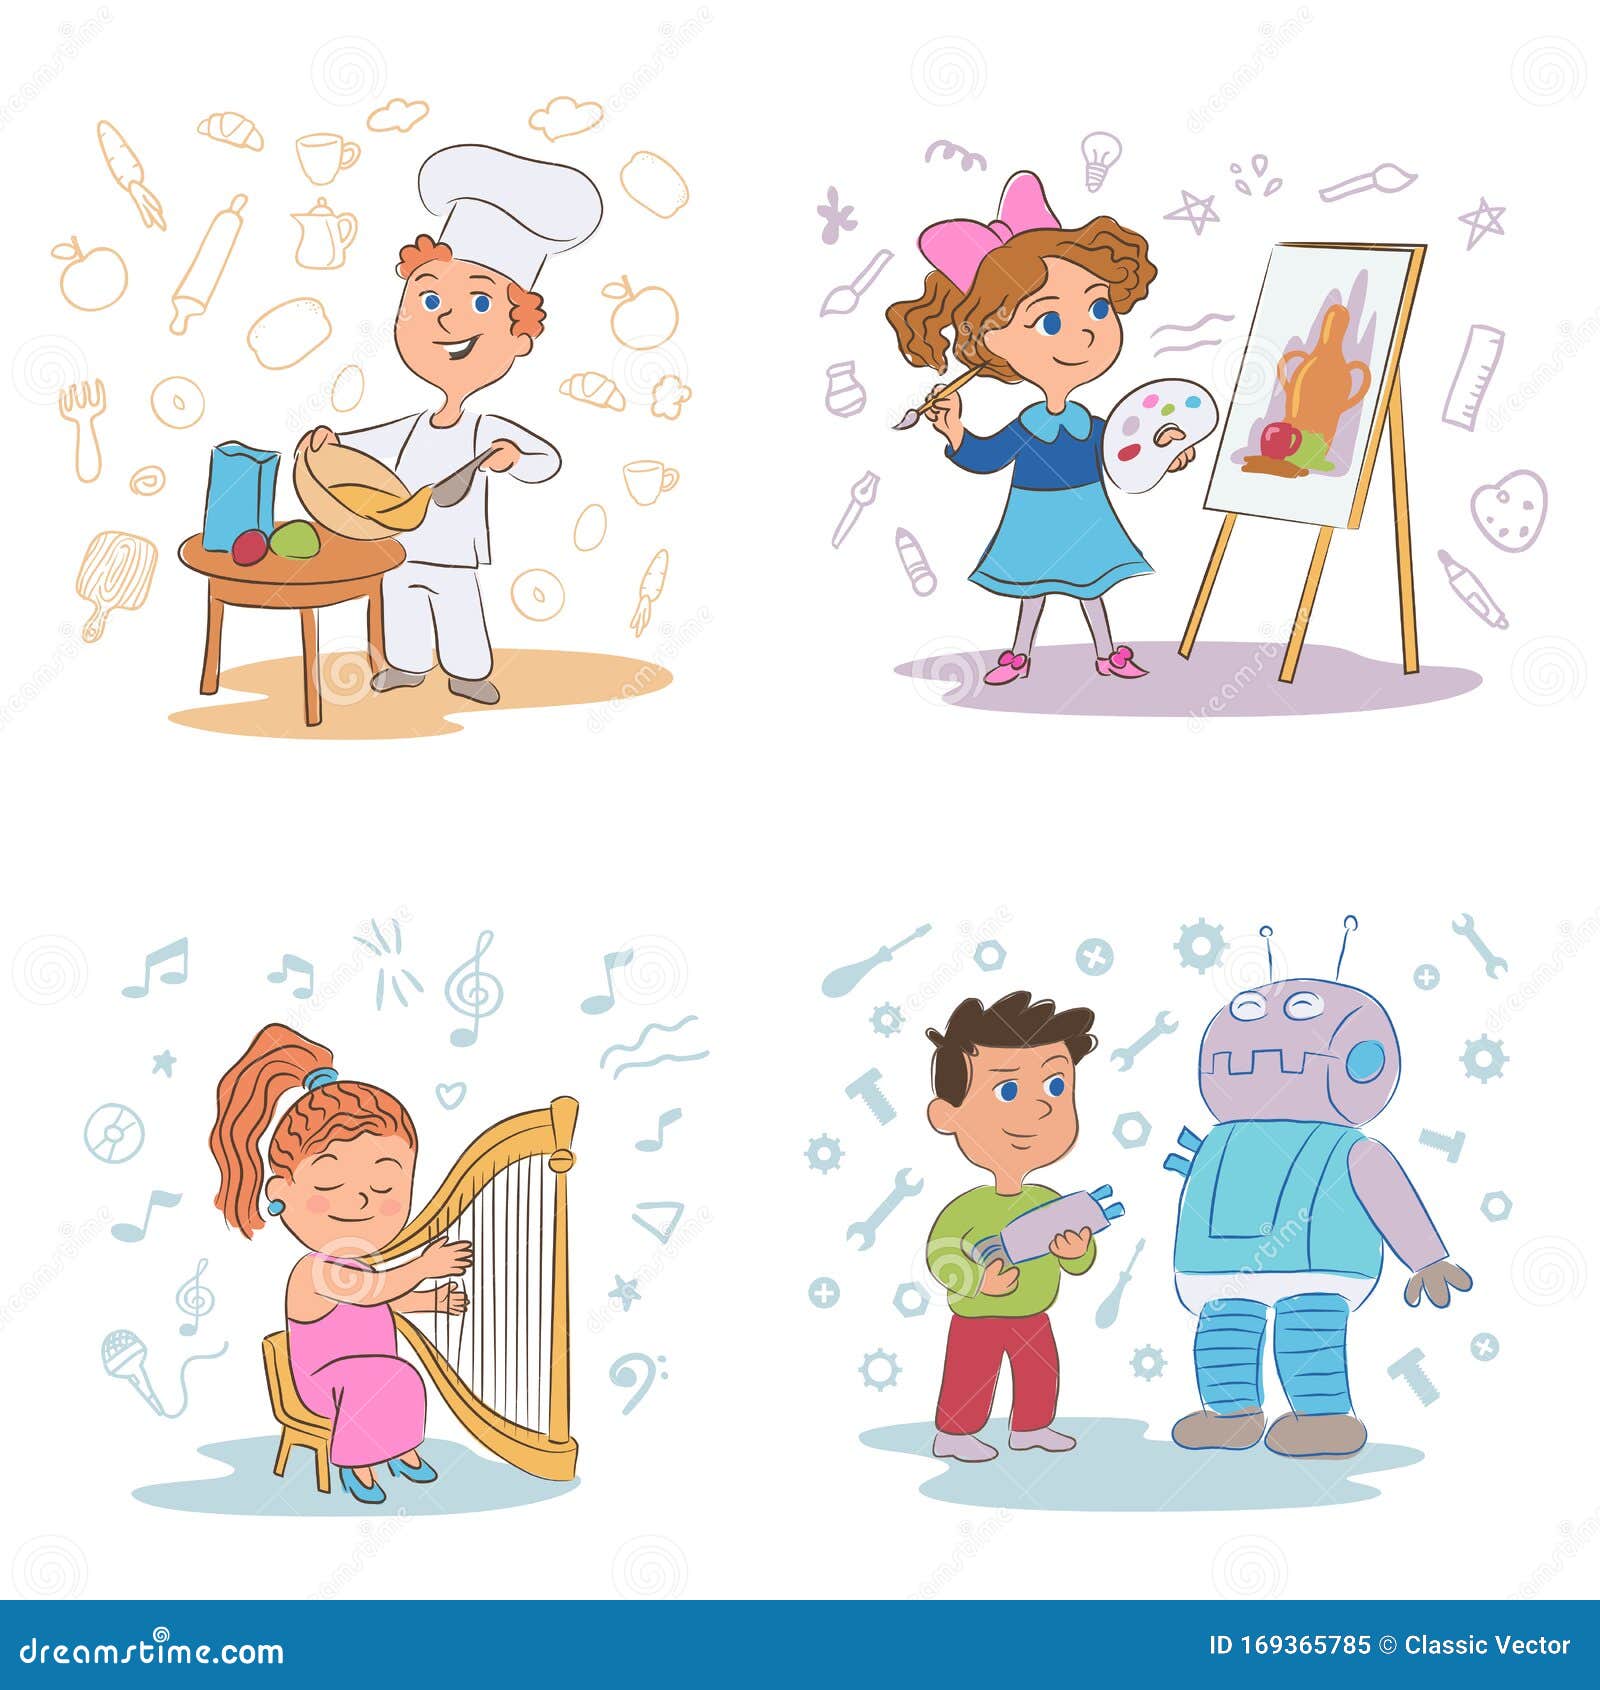 https://thumbs.dreamstime.com/z/kids-hobbies-cartoon-illustrations-set-cooking-art-music-engineering-male-female-children-master-classes-characters-169365785.jpg